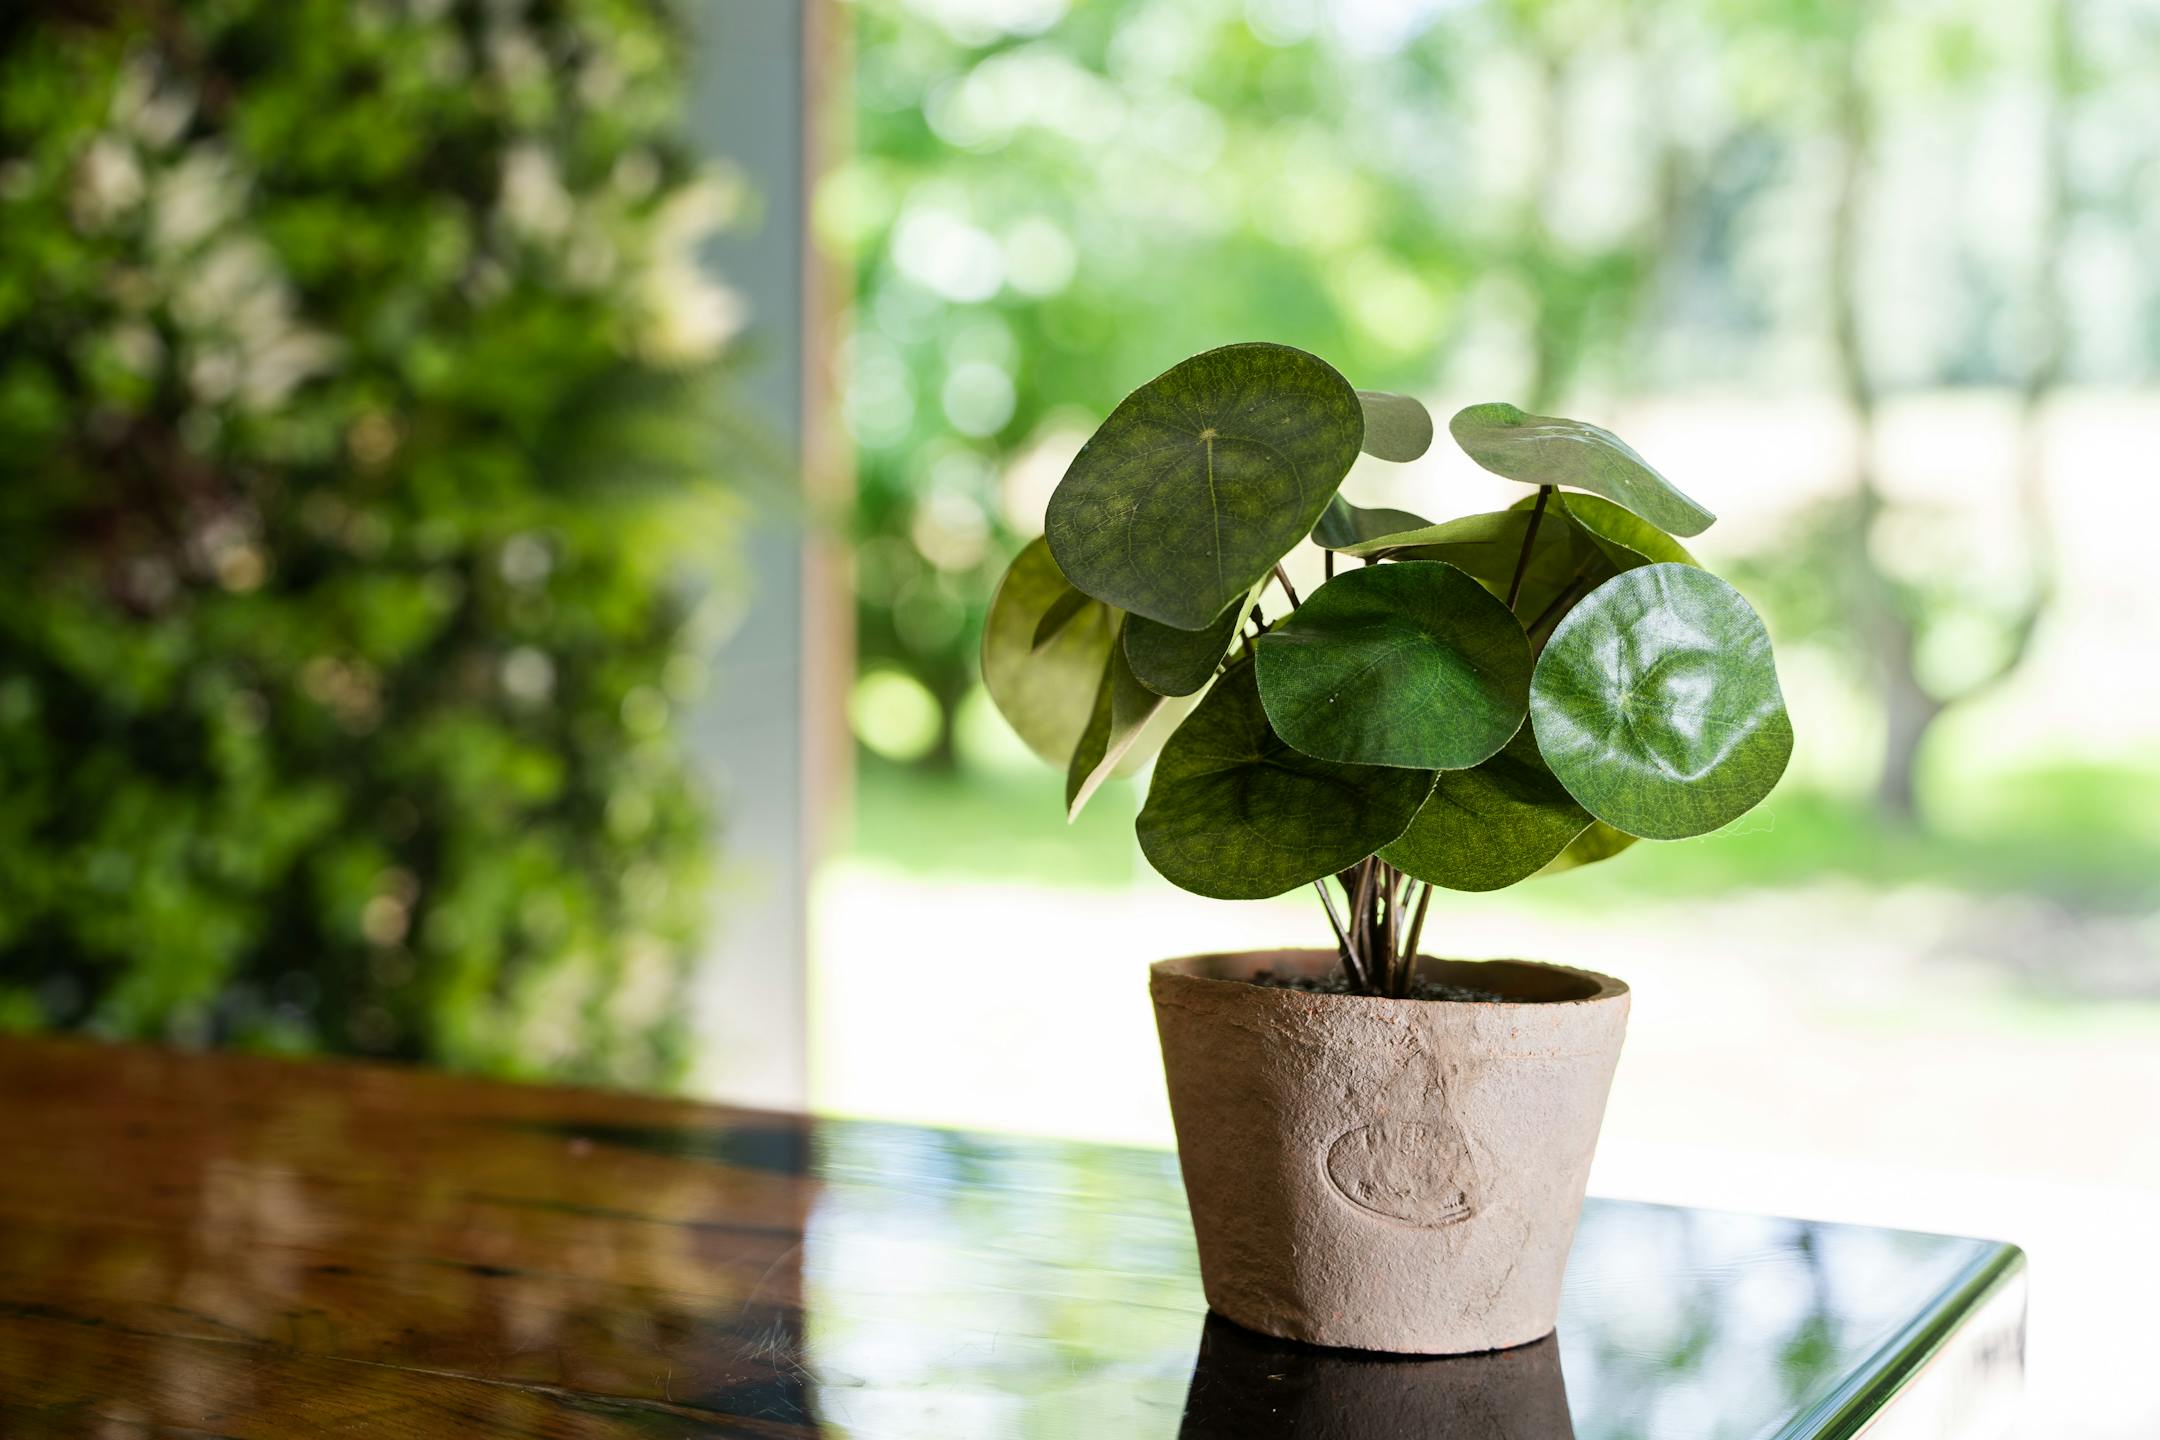 Artificial pilea bush in terracotta pot on wooden desk with greenery